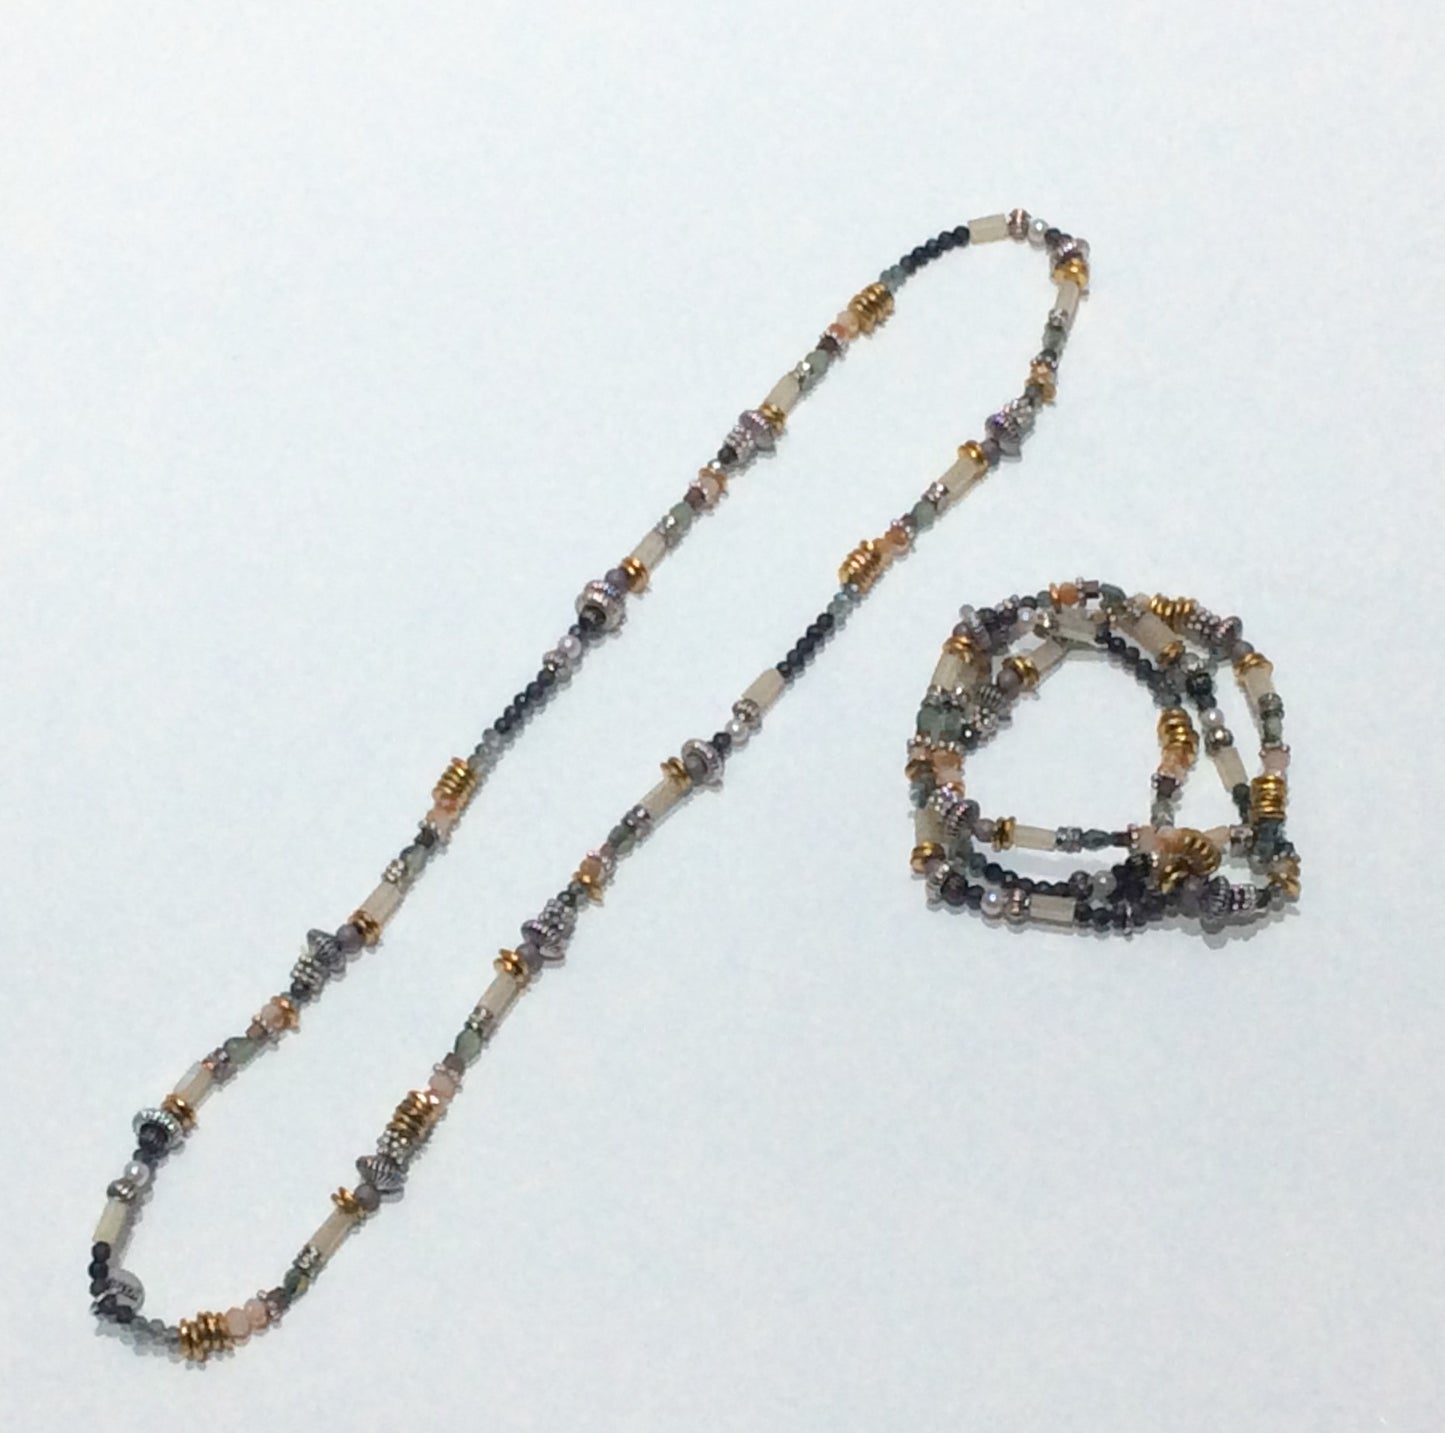 Bracelet/Necklace-Beautiful crystal and silver beaded elasticized bracelet or necklace